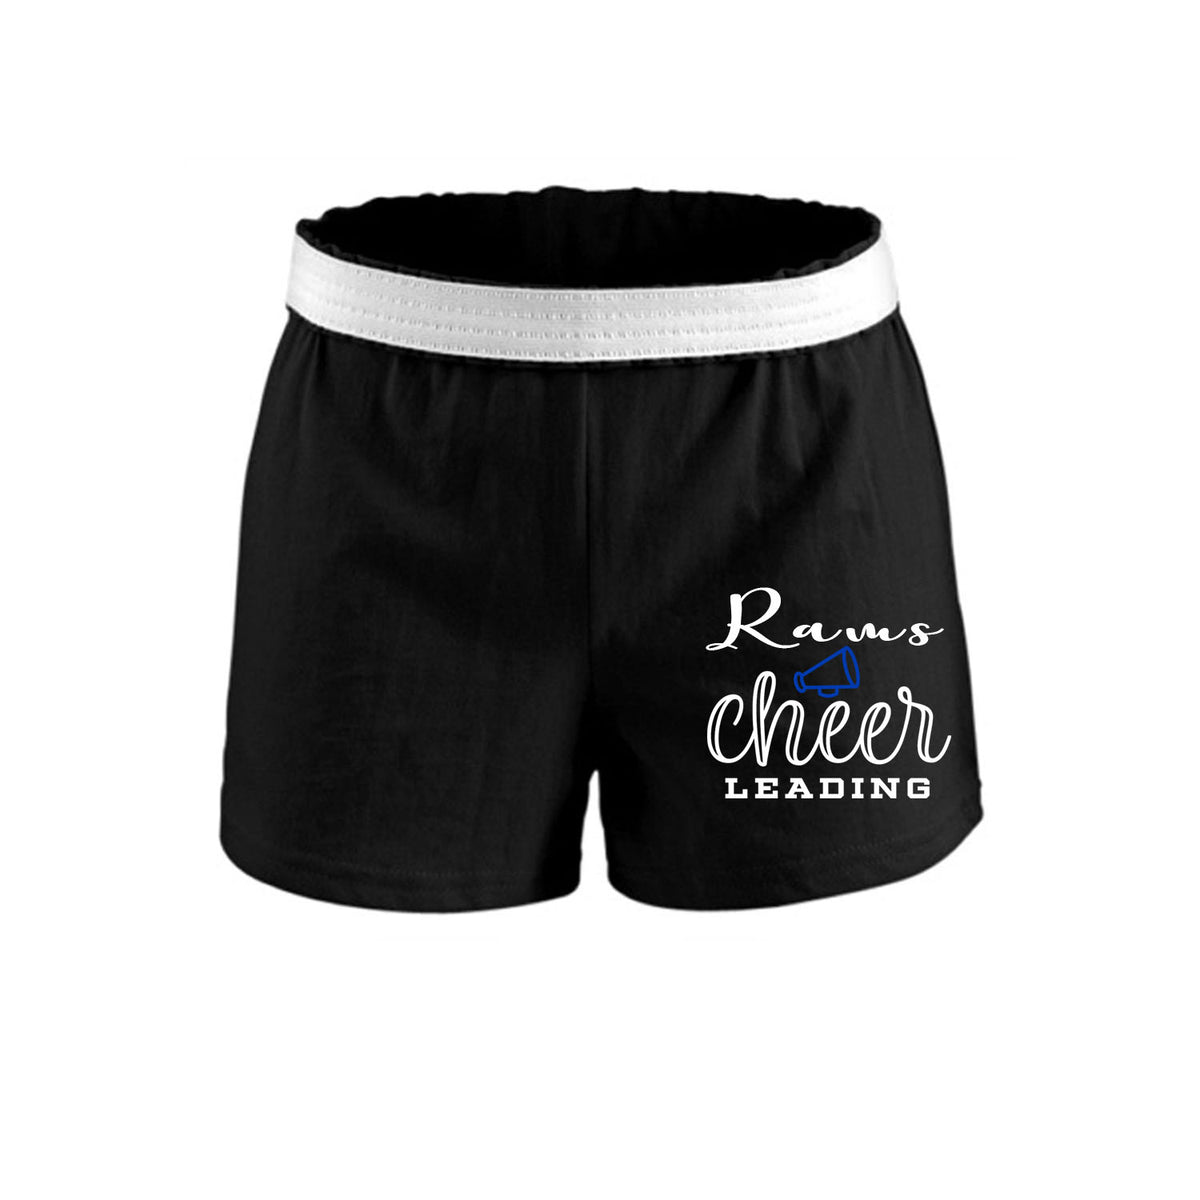 Franklin Cheer girls Shorts Design 2